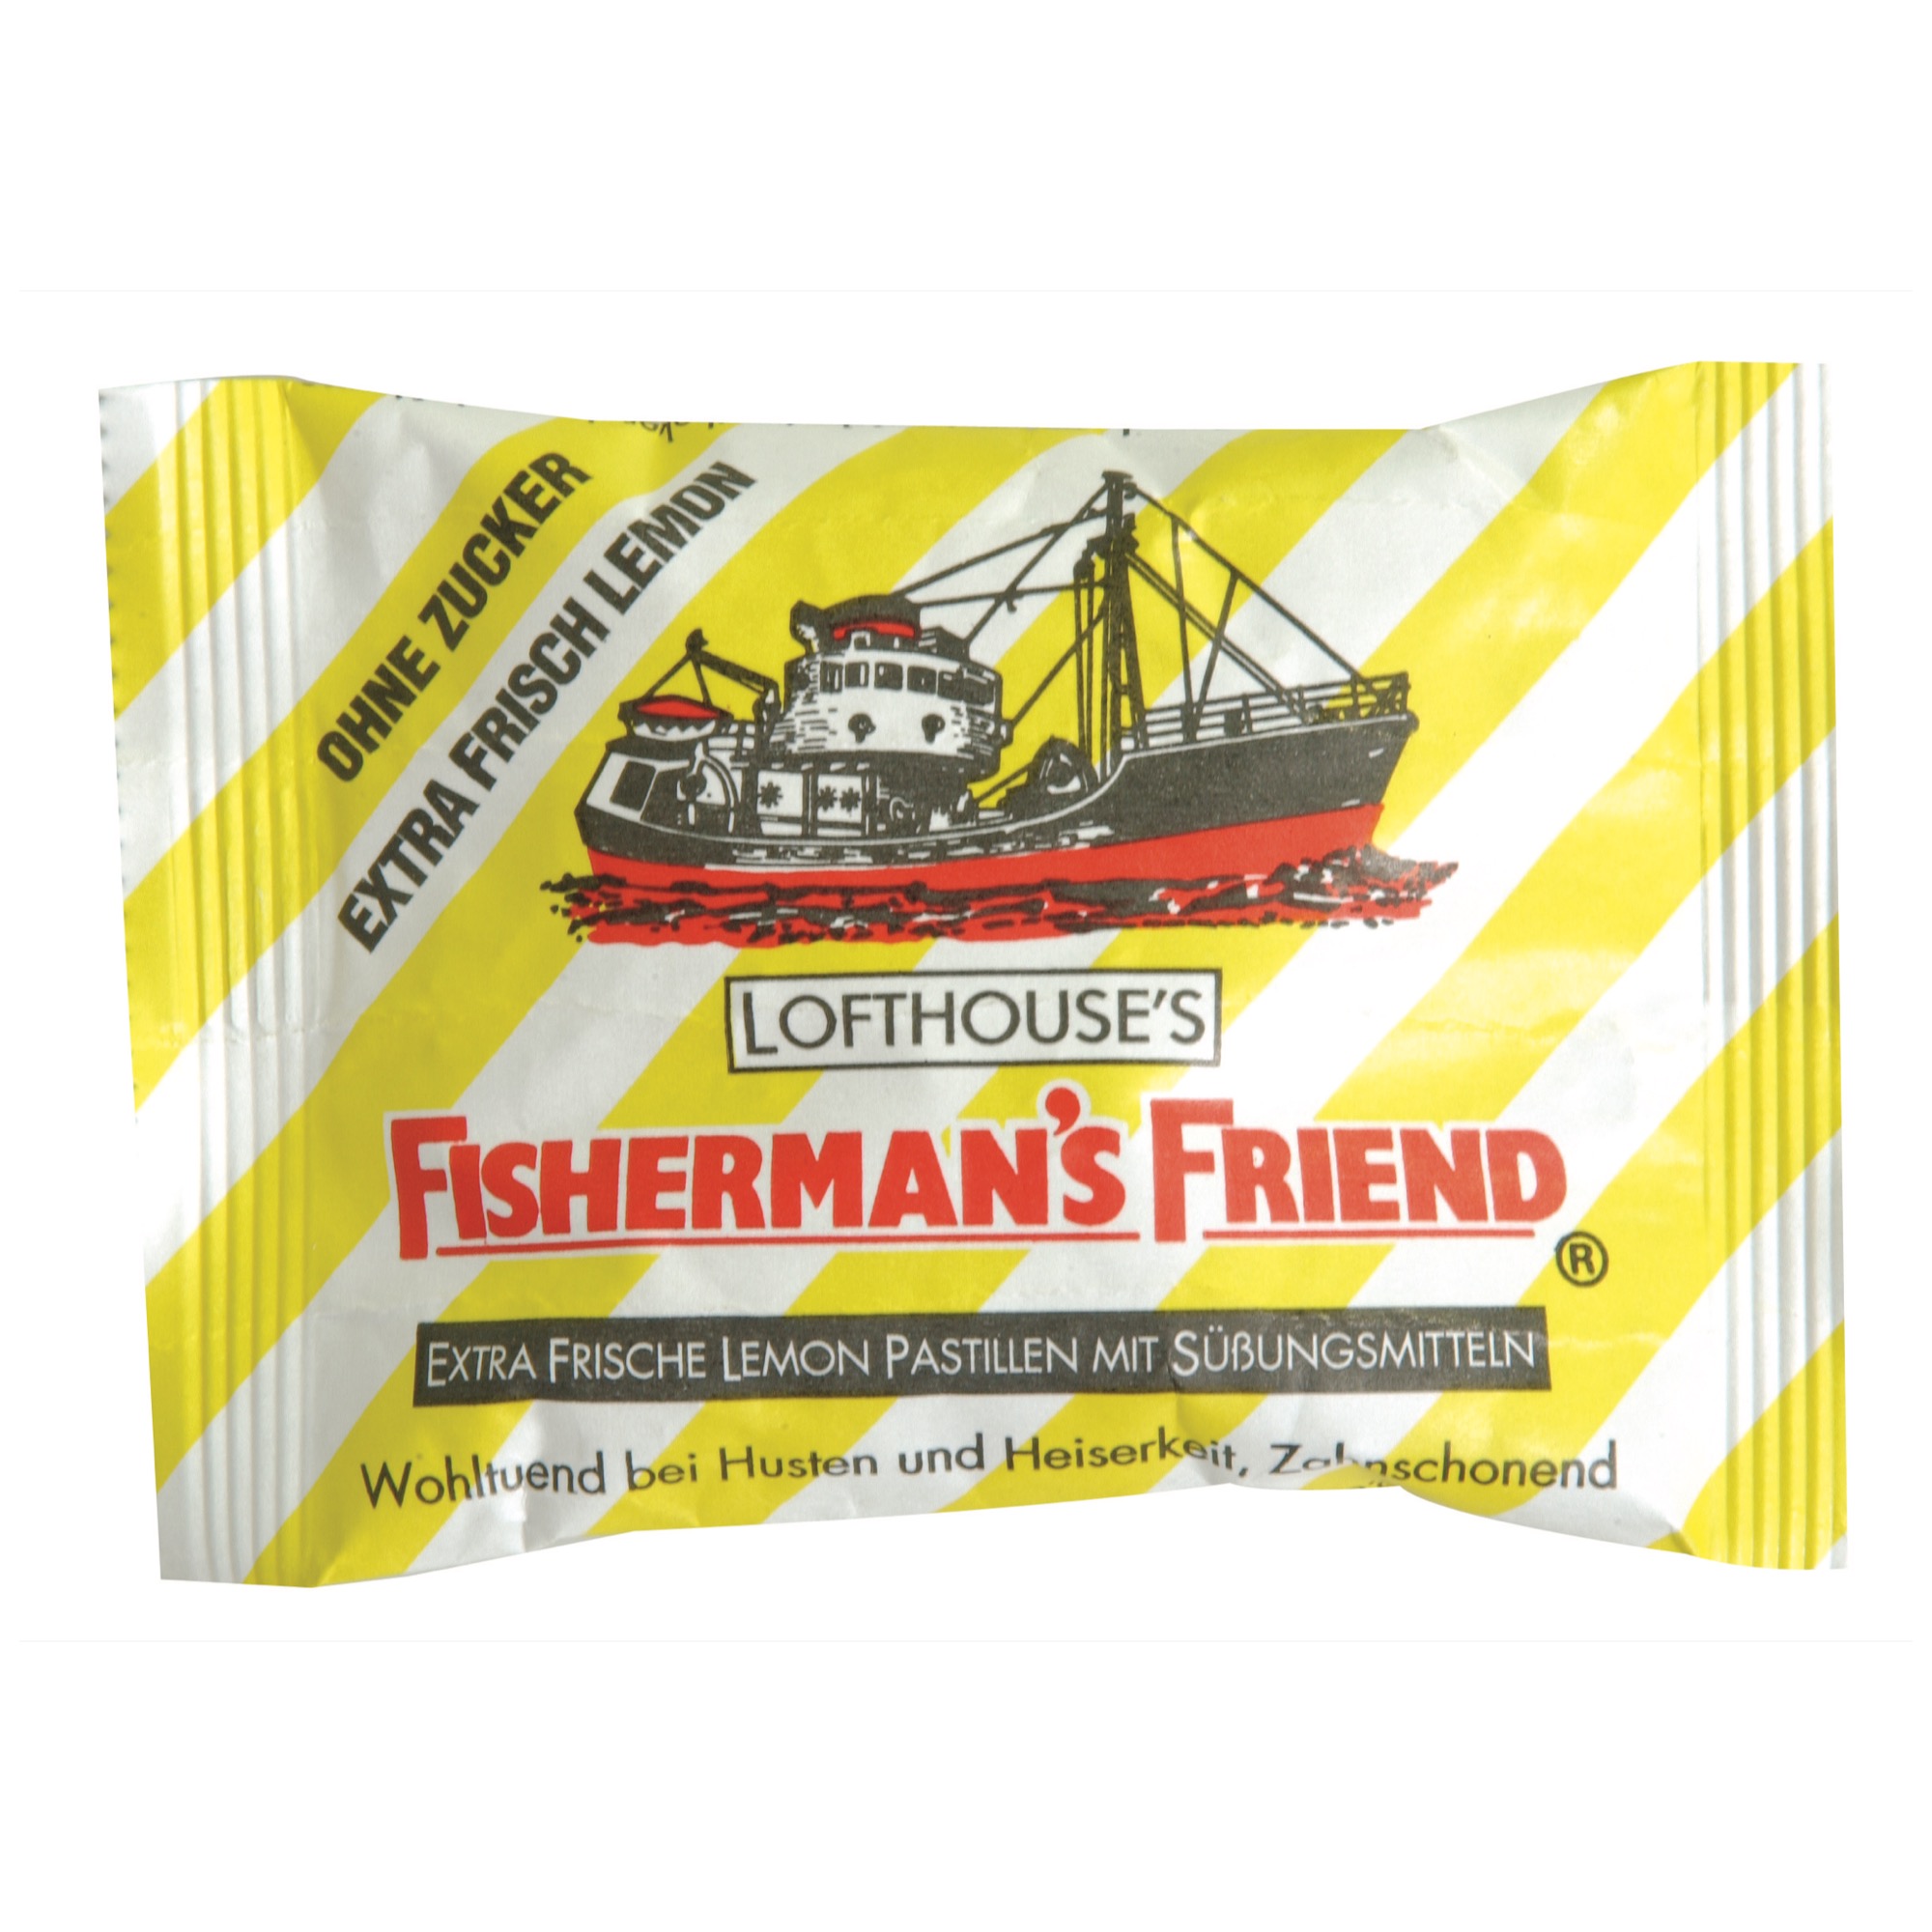 Fishermans Friend ZF 25g lemon